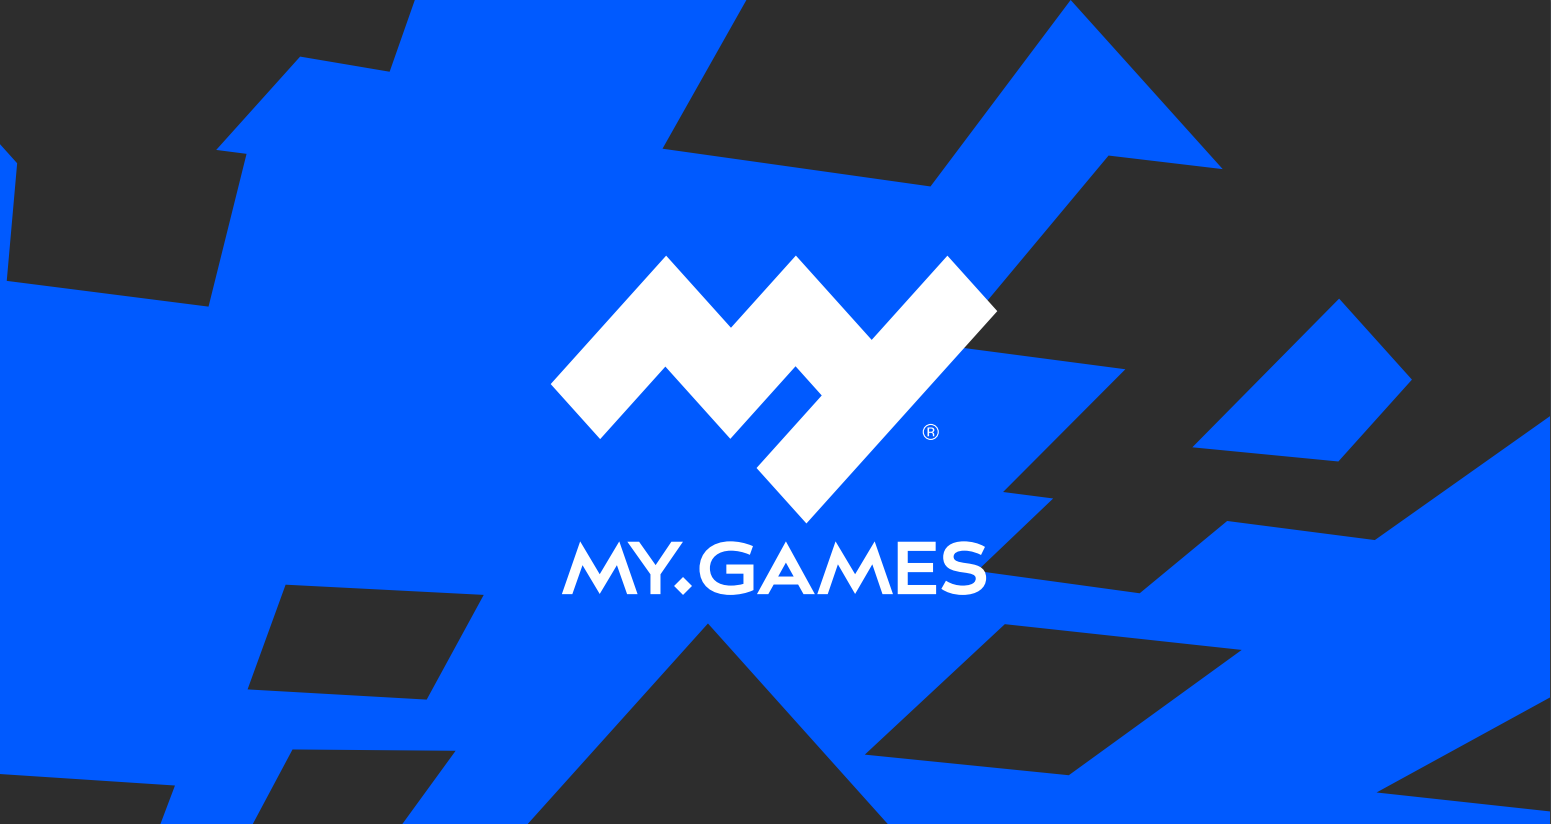 M y game. My games. Май стор гейм. My games значок. Логотипы игровых платформ.